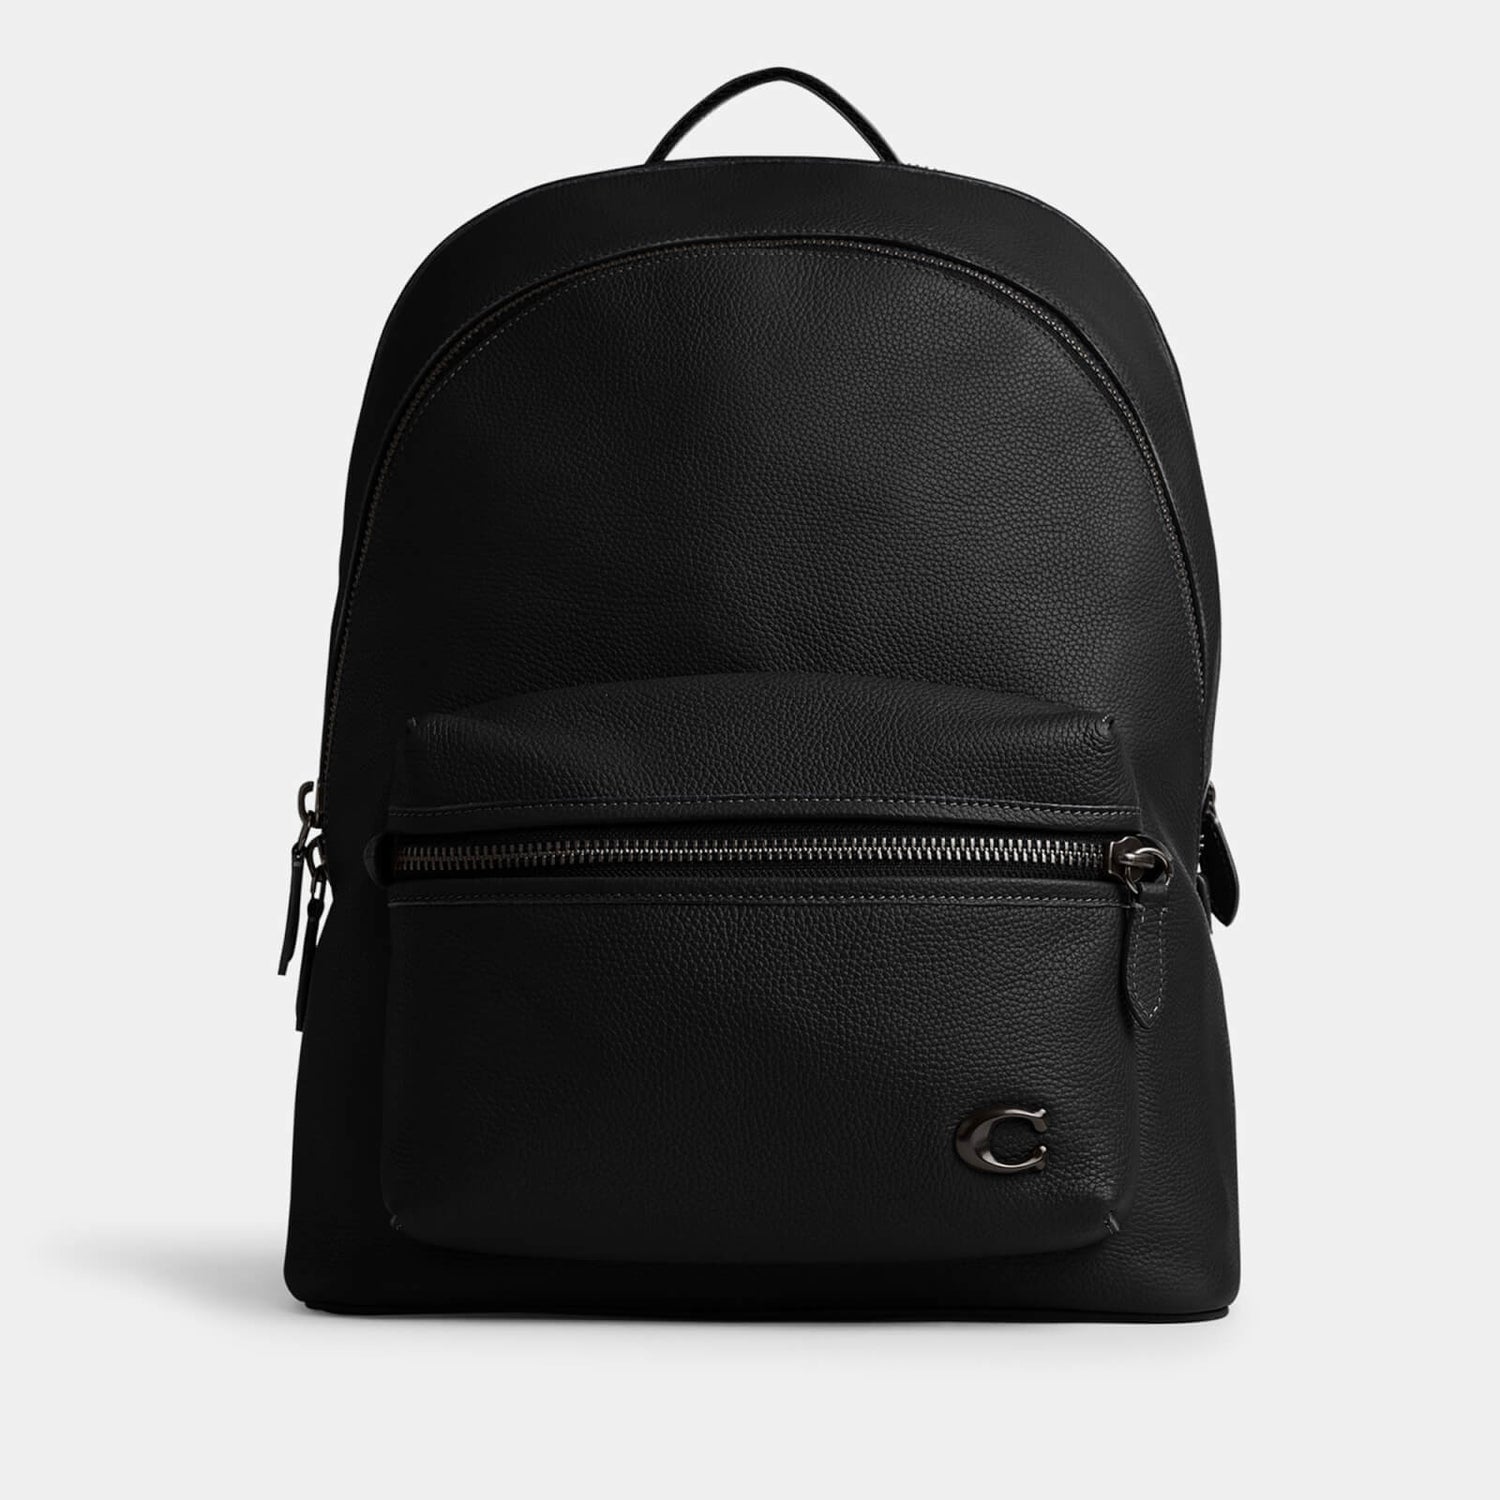 Coach Charter Pebble Leather Backpack | TheHut.com